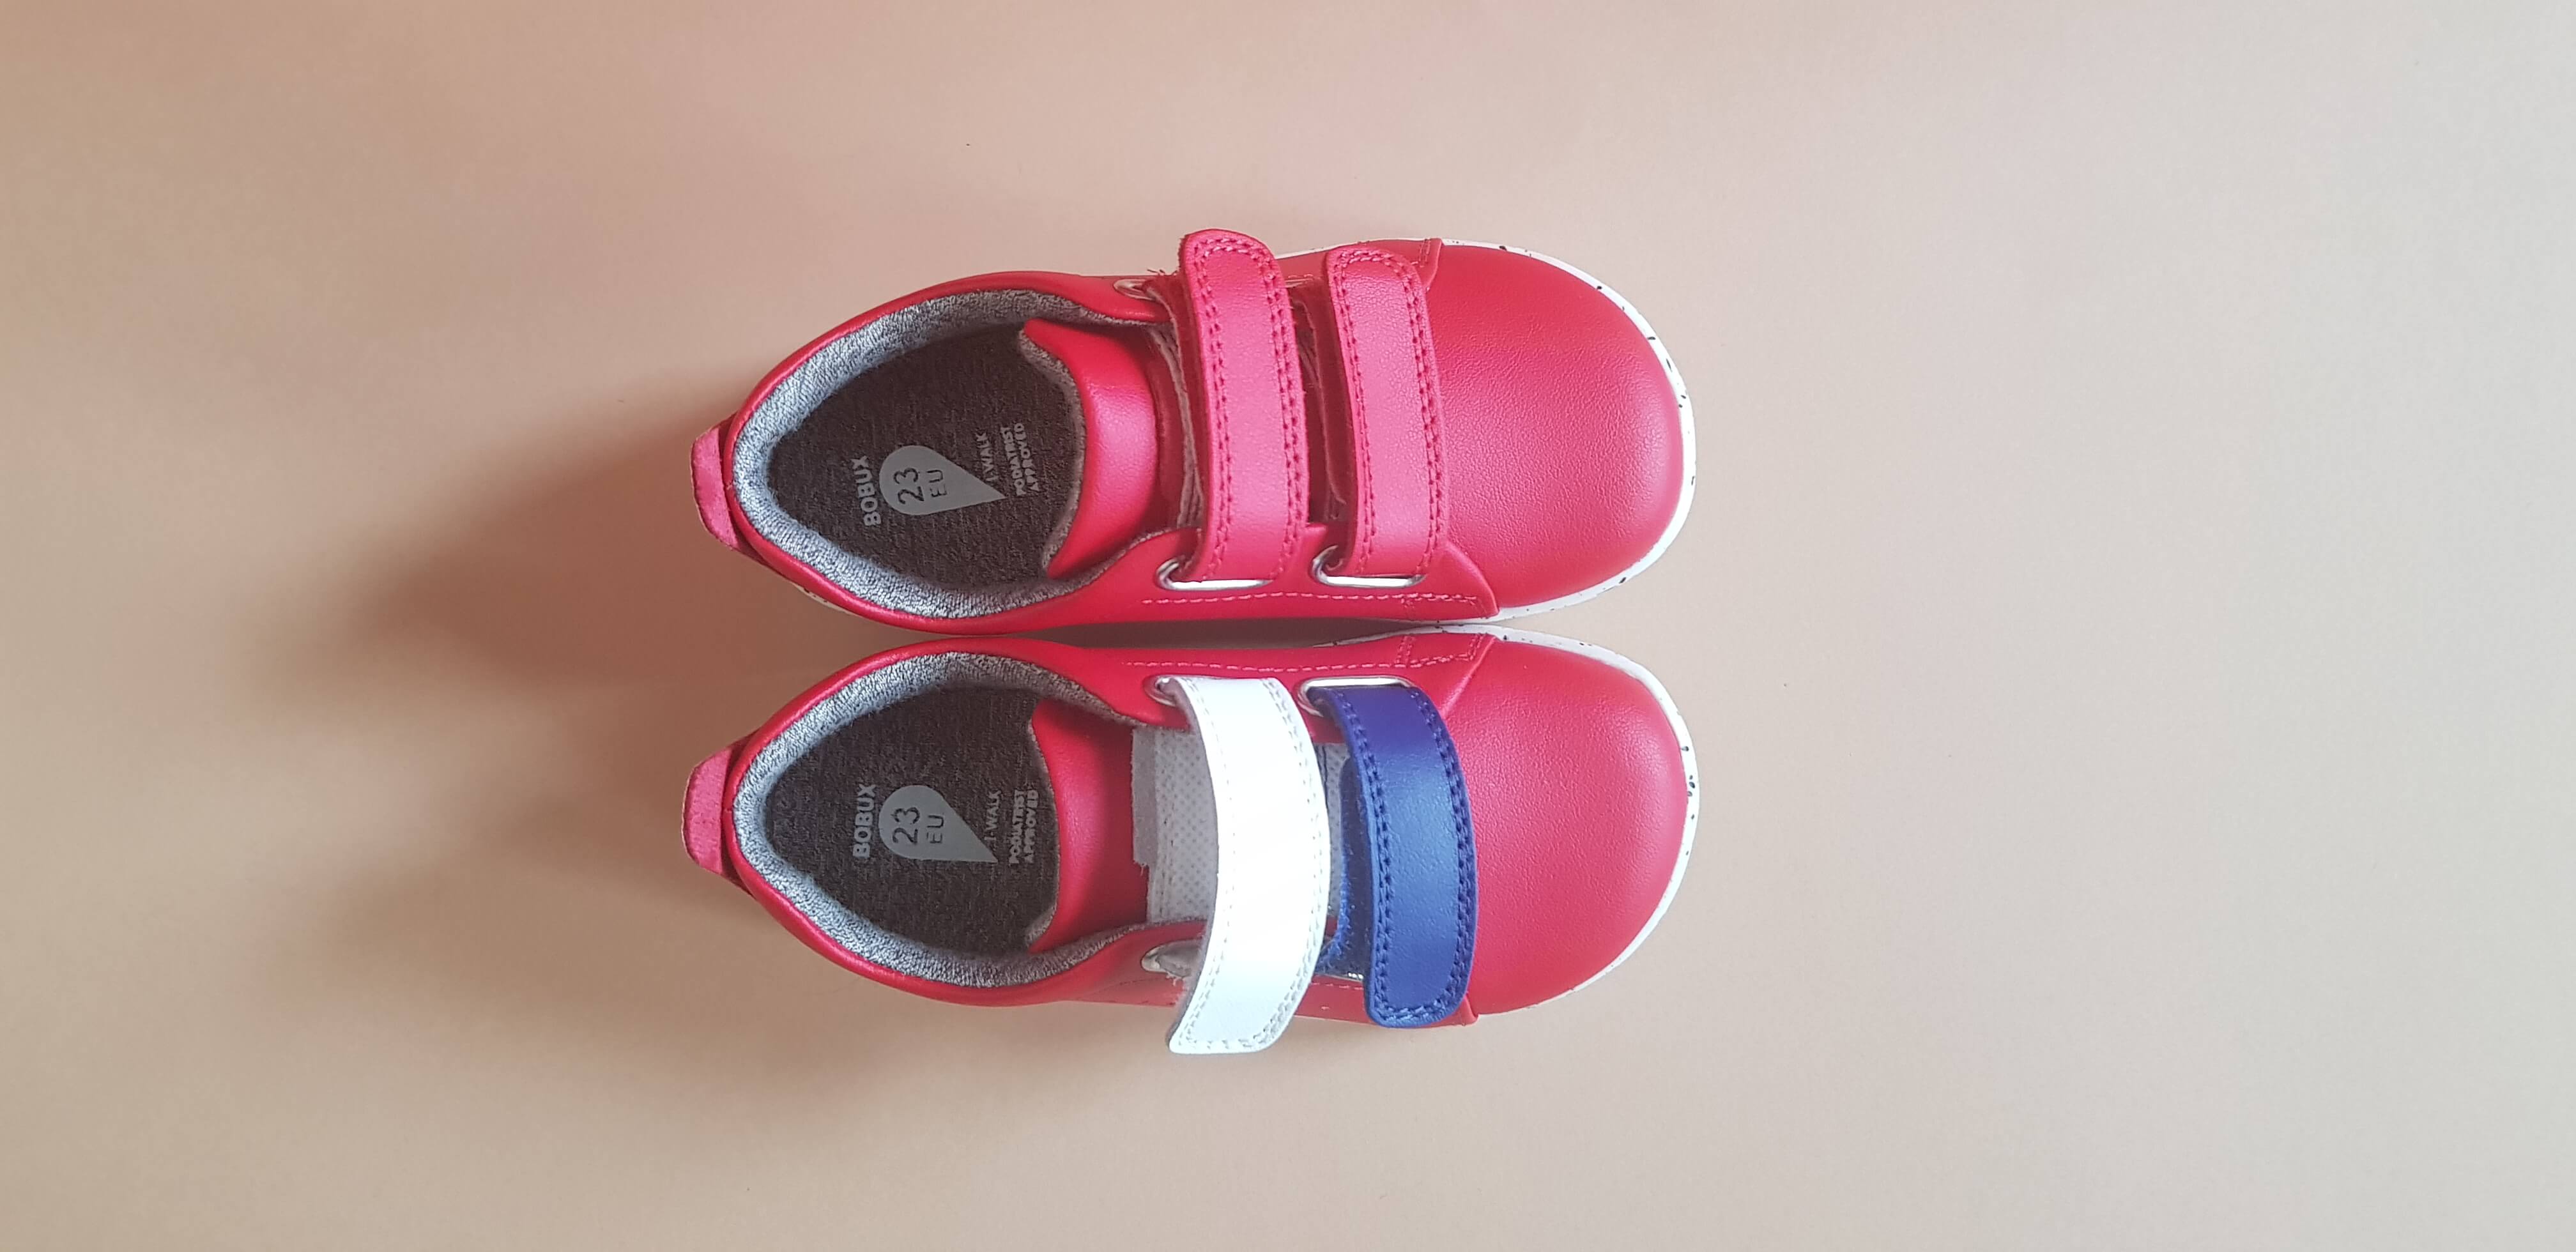 Preschool Shoes - Bobux I-Walk in Red